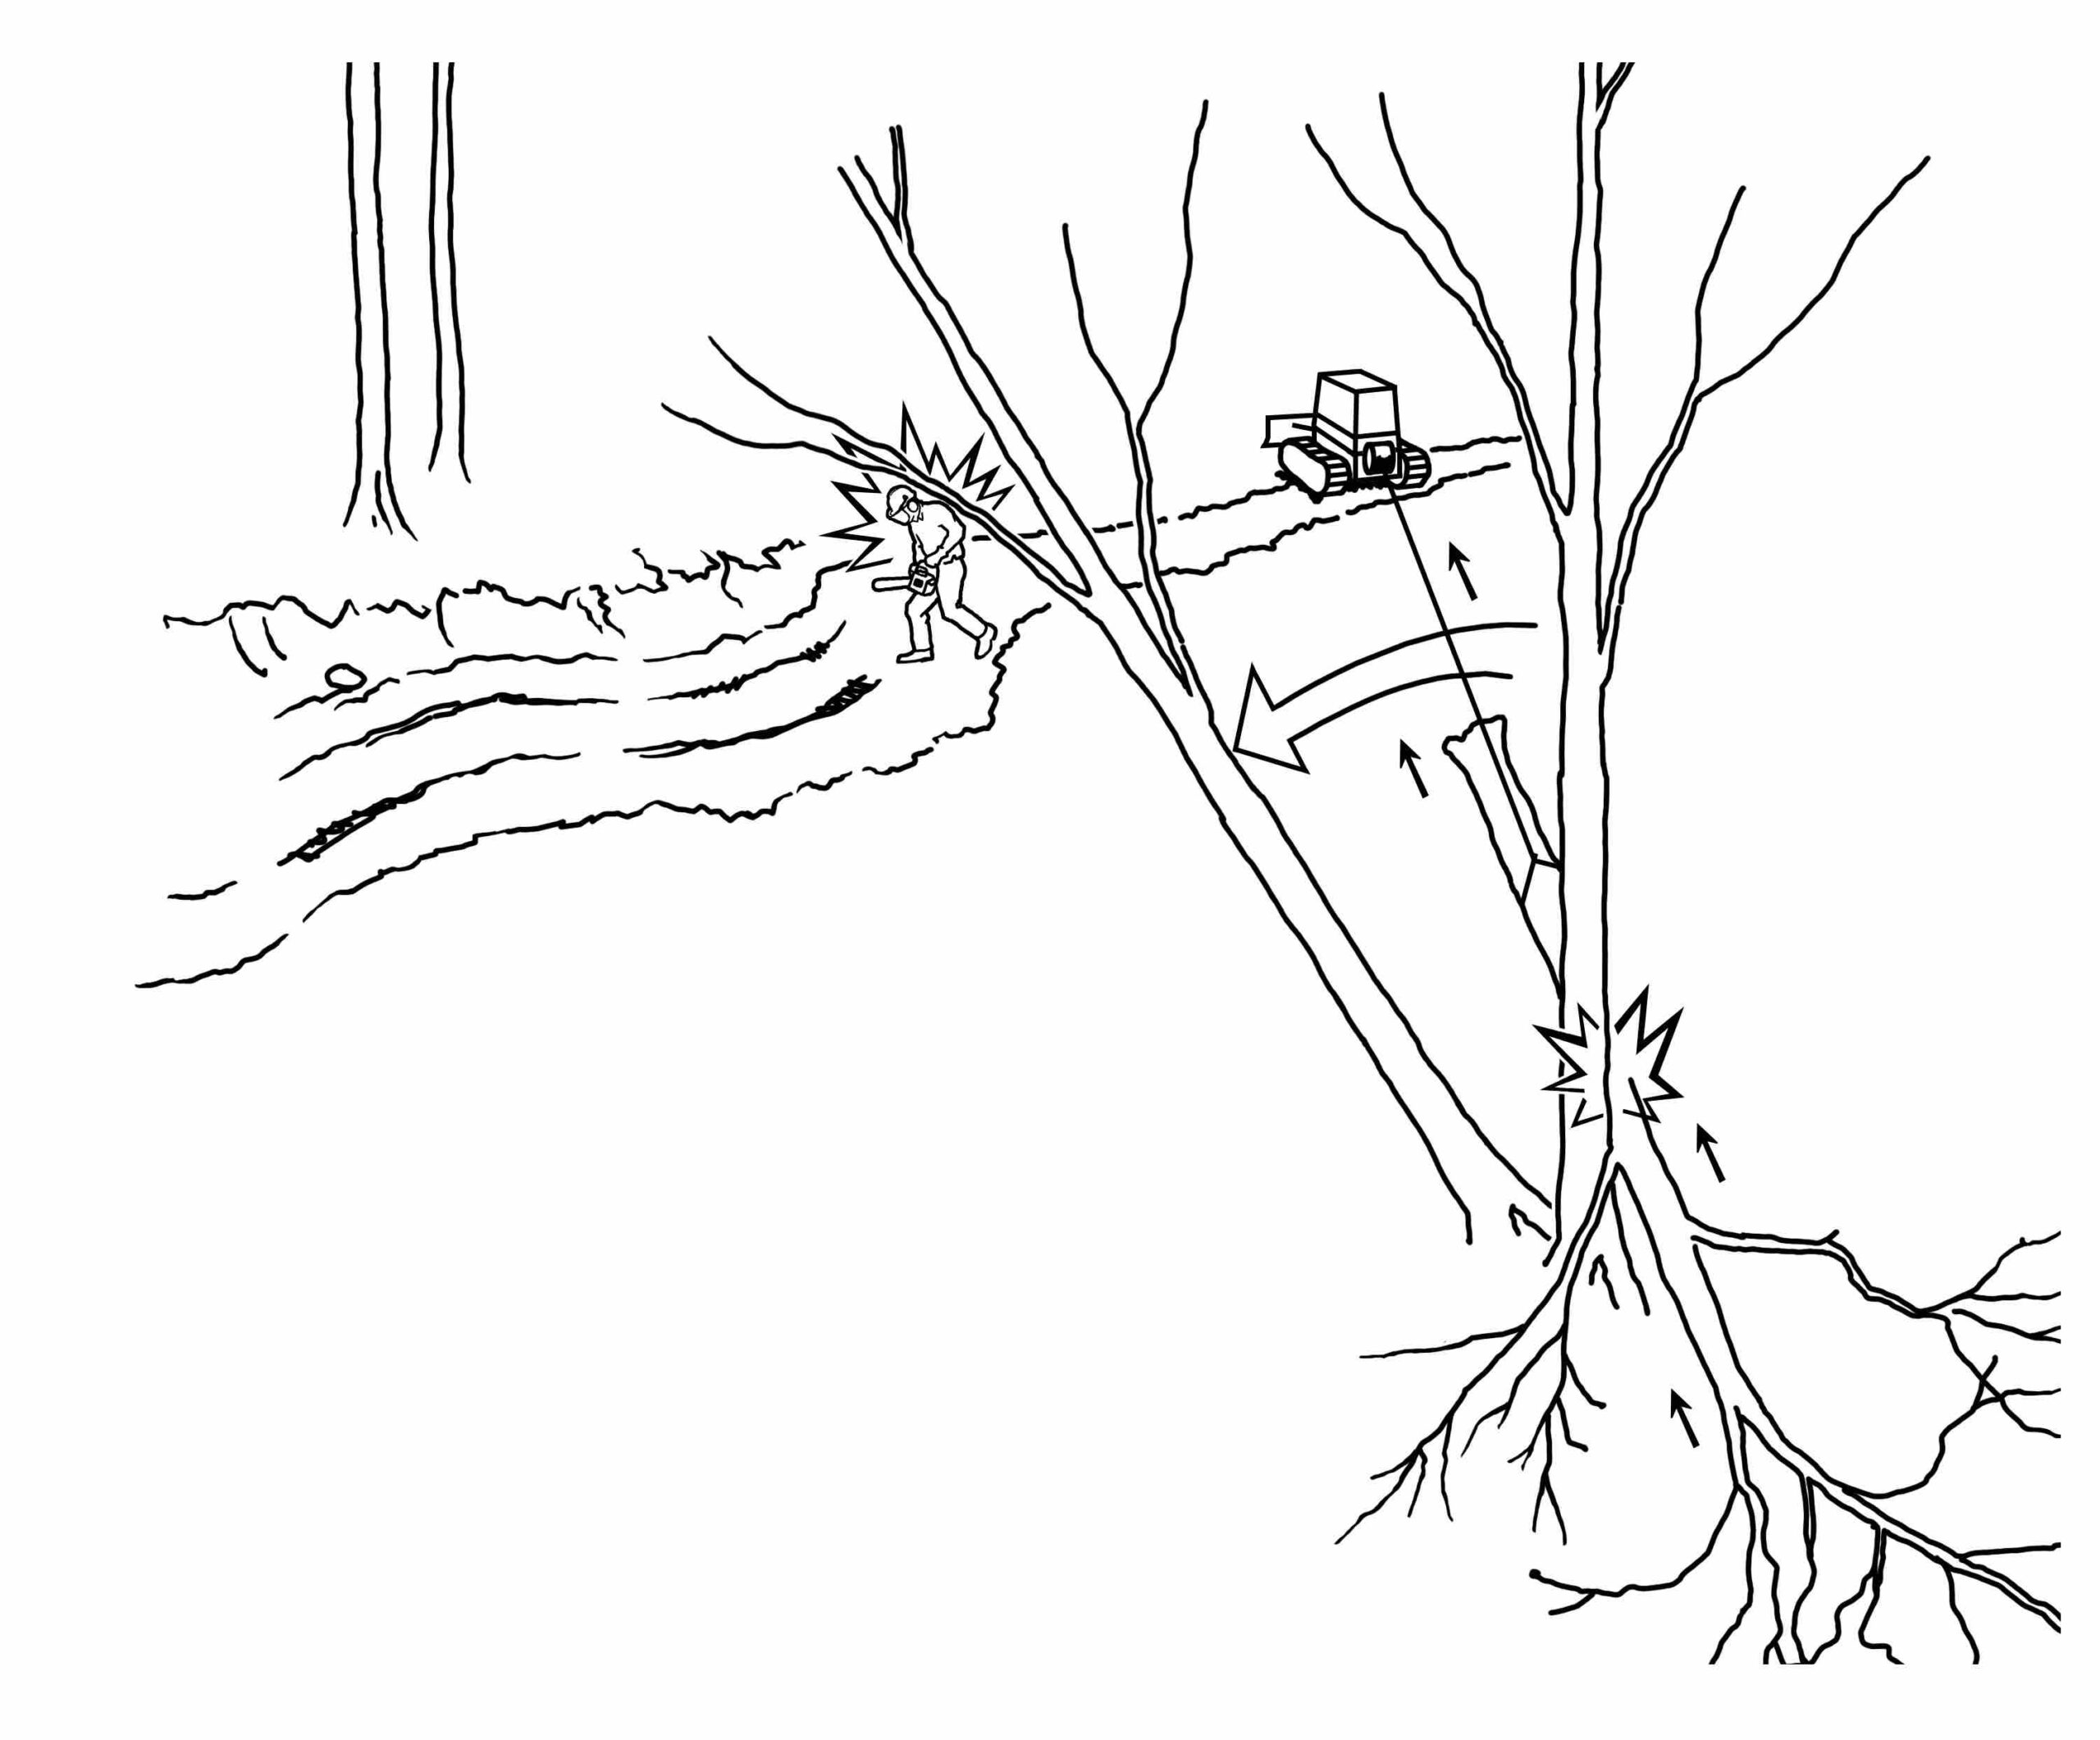 Winching Operation Uproots Standing Tree Image